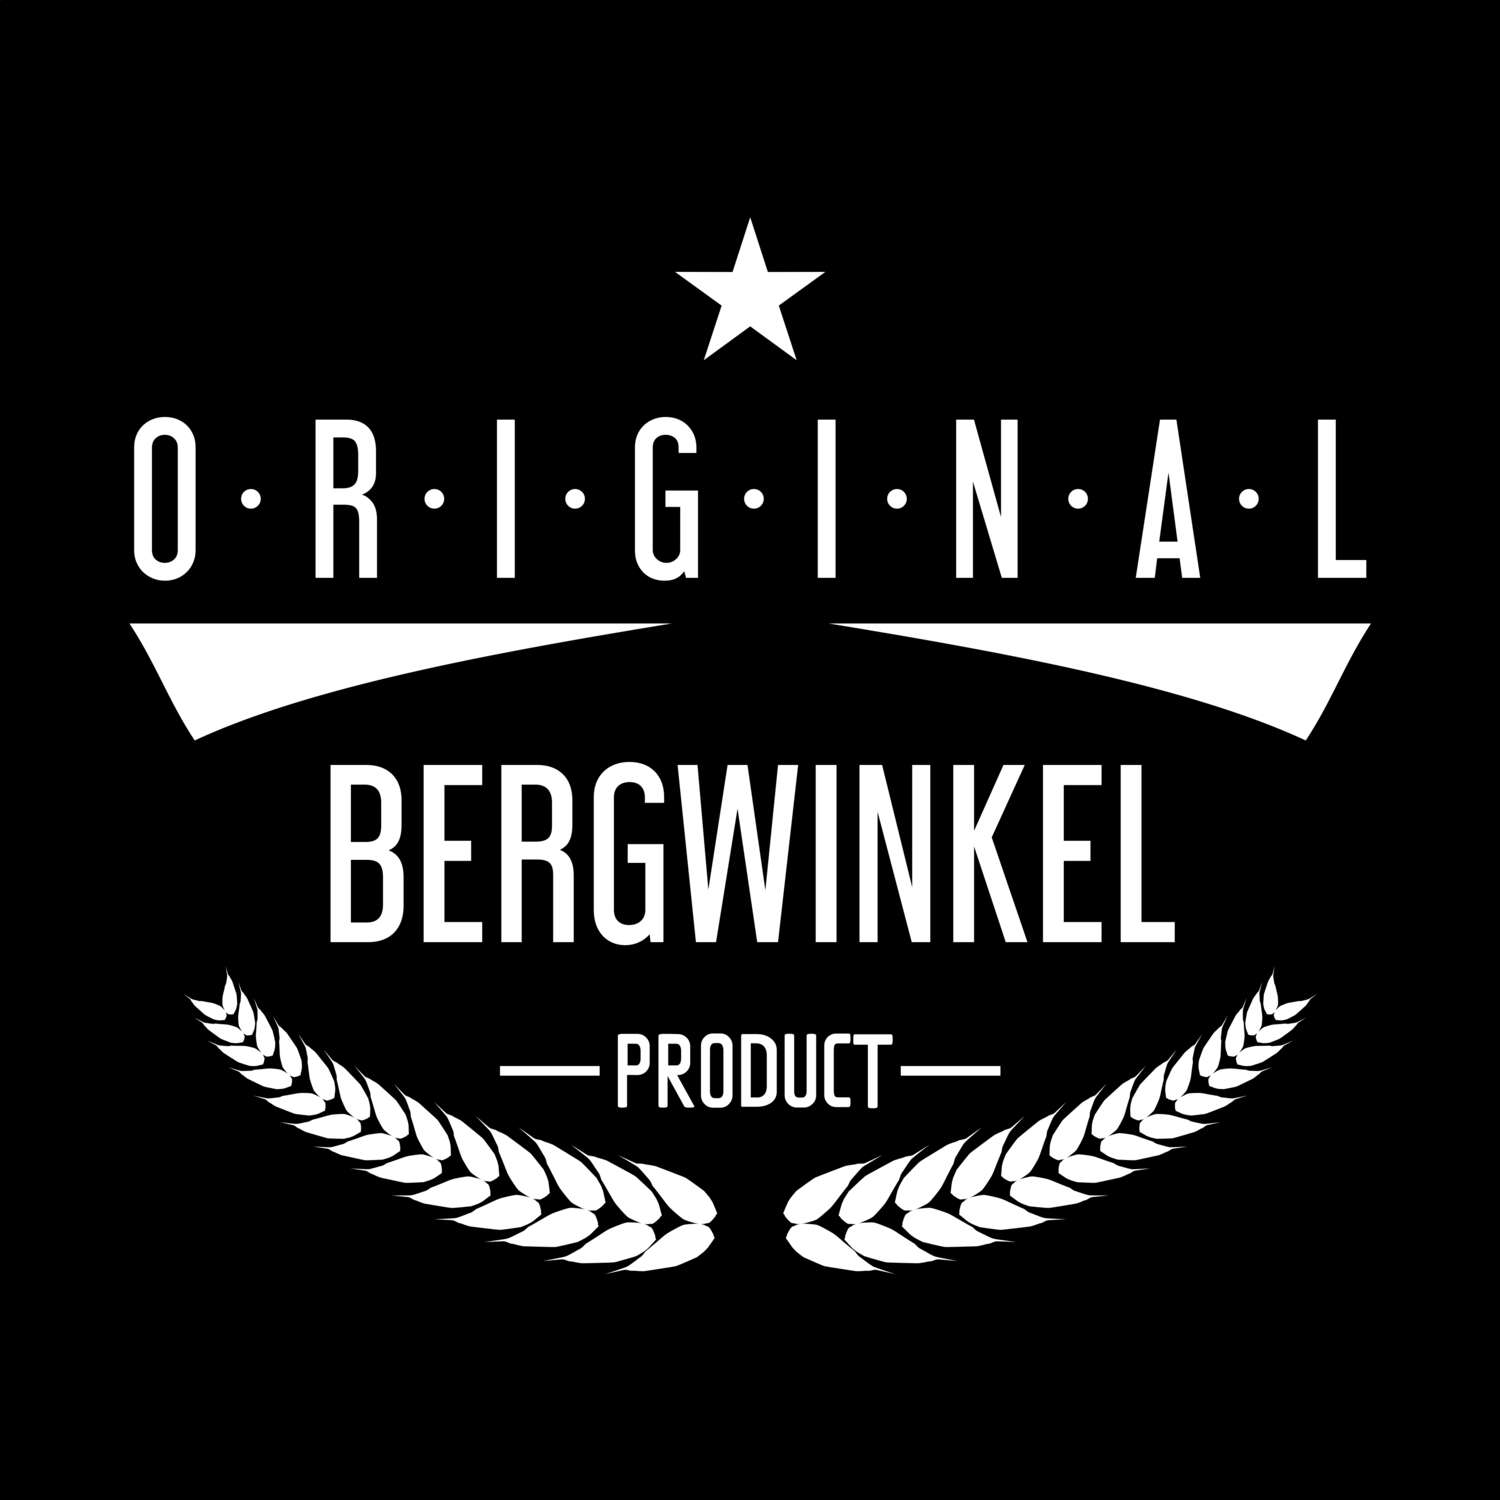 Bergwinkel T-Shirt »Original Product«